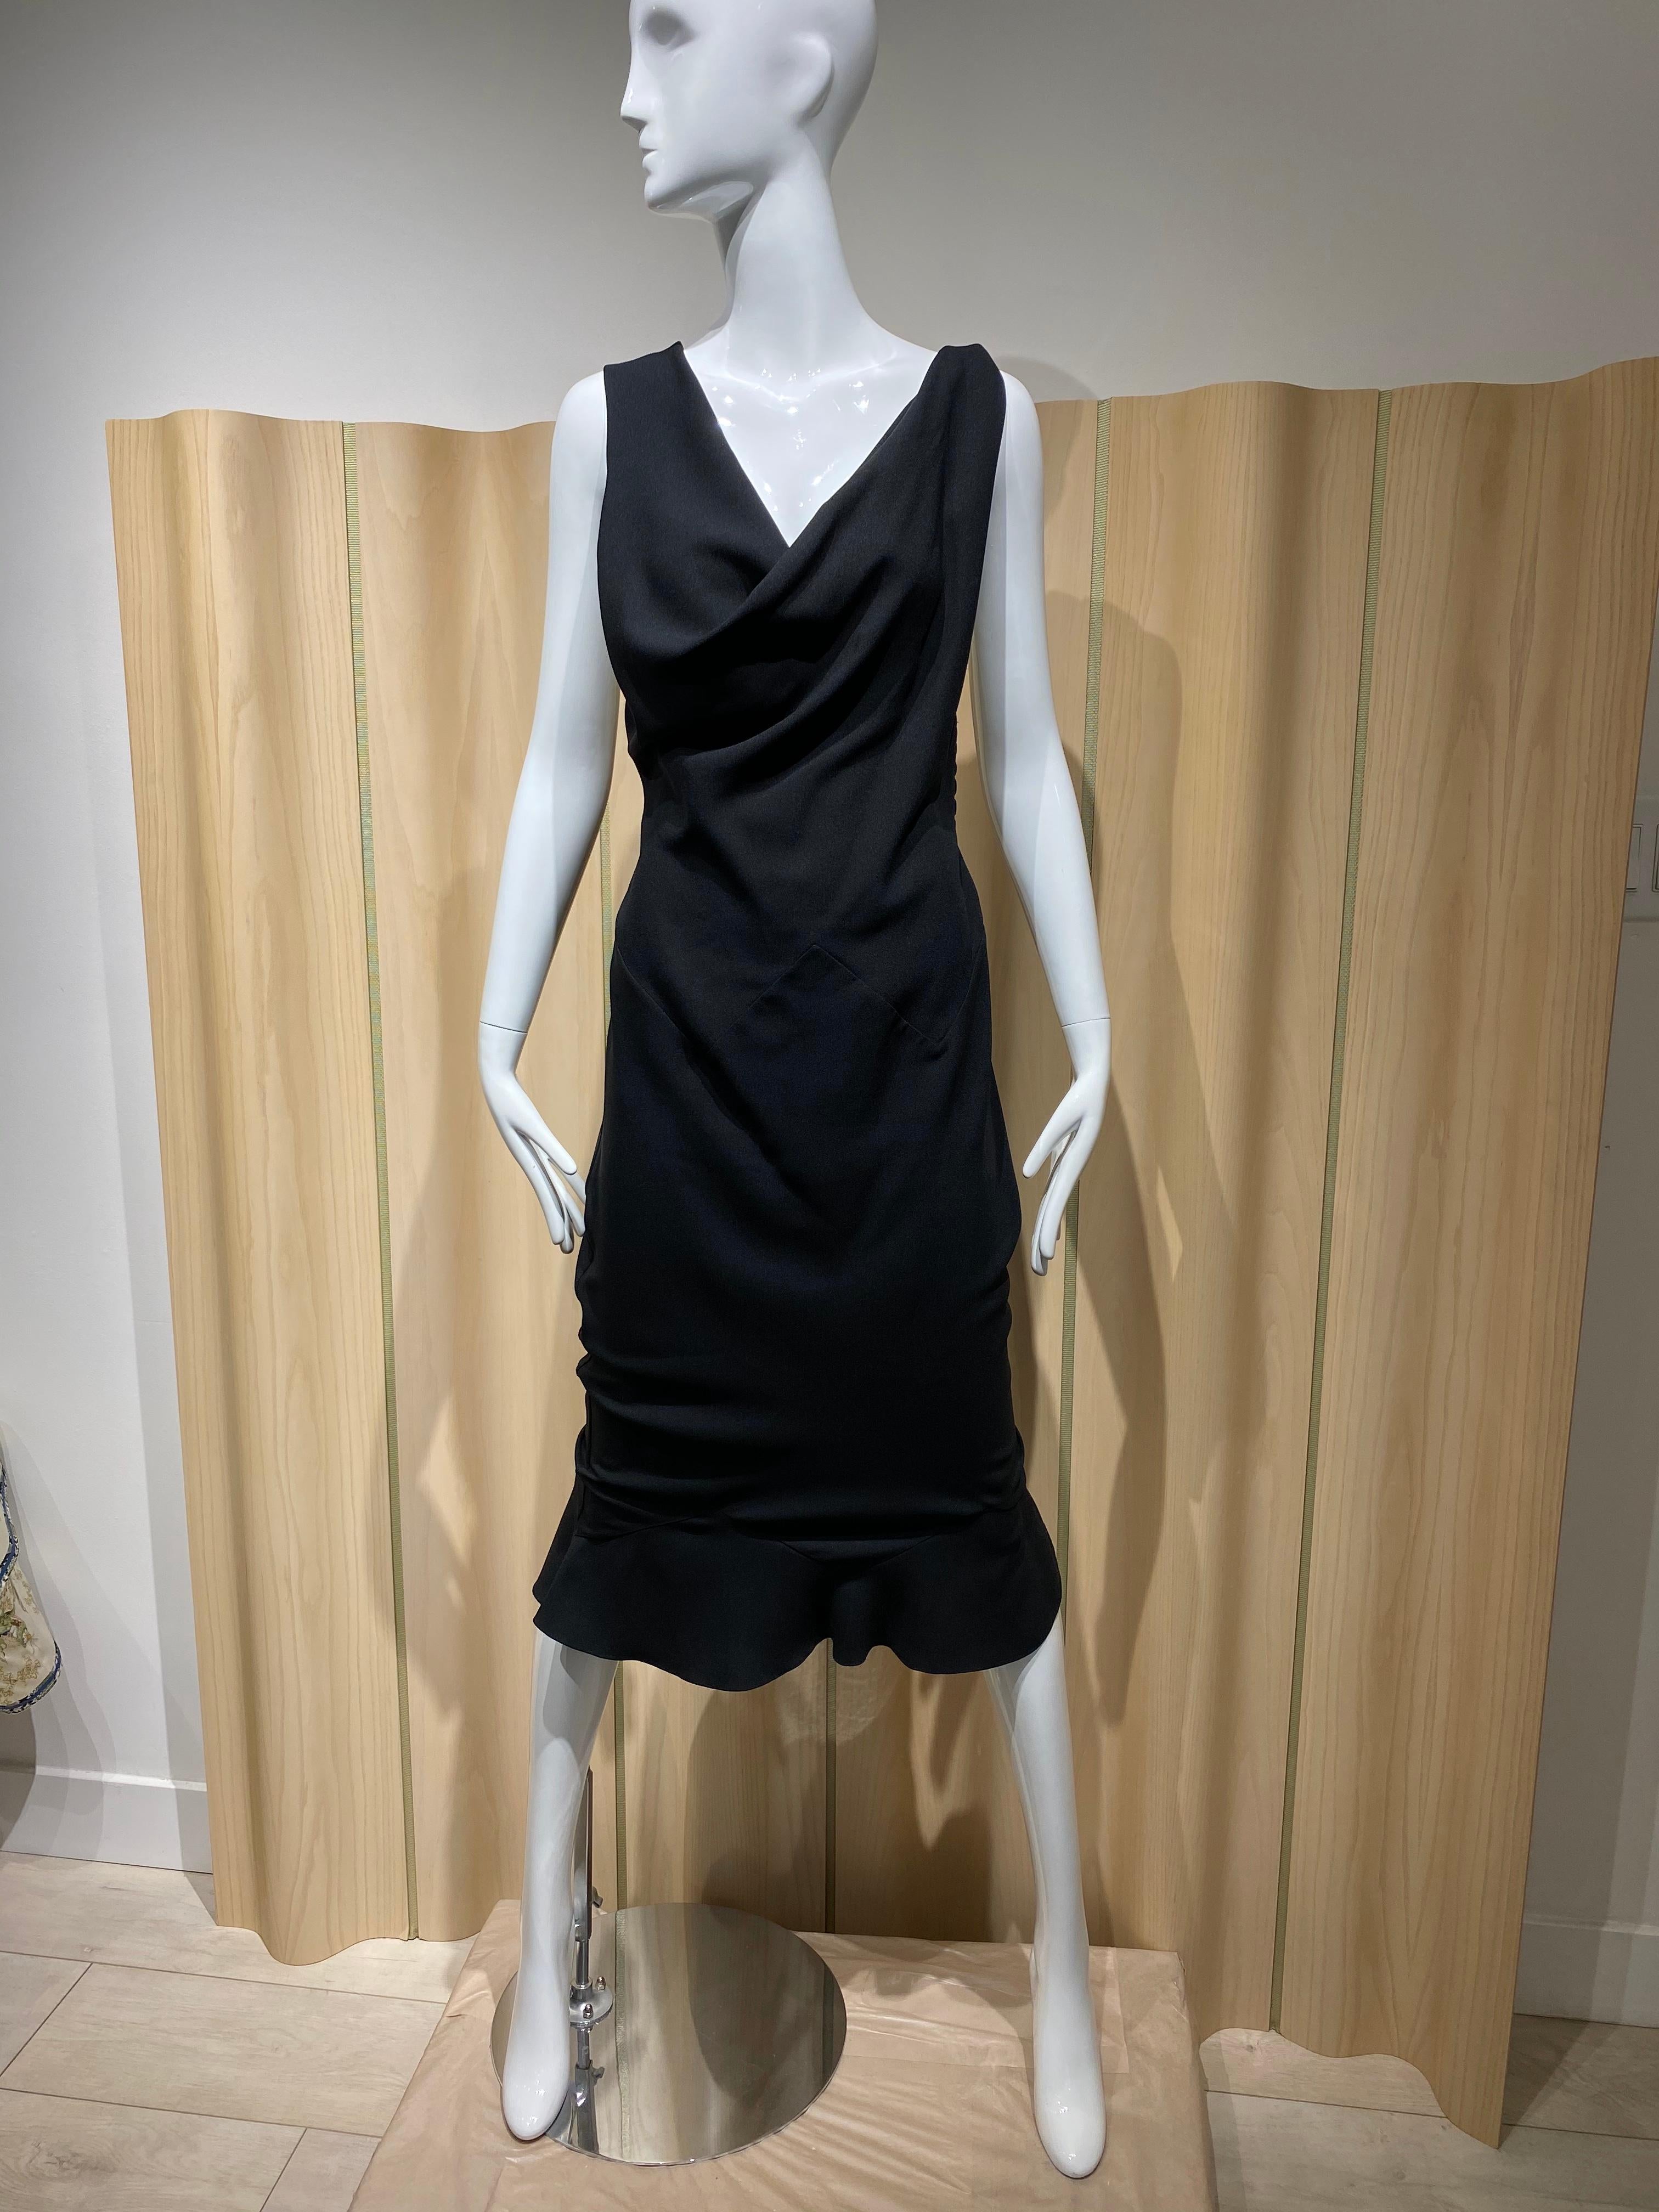 John Galliano Black silk crepe criss cross cocktail dress. 
Fit Size 4/6